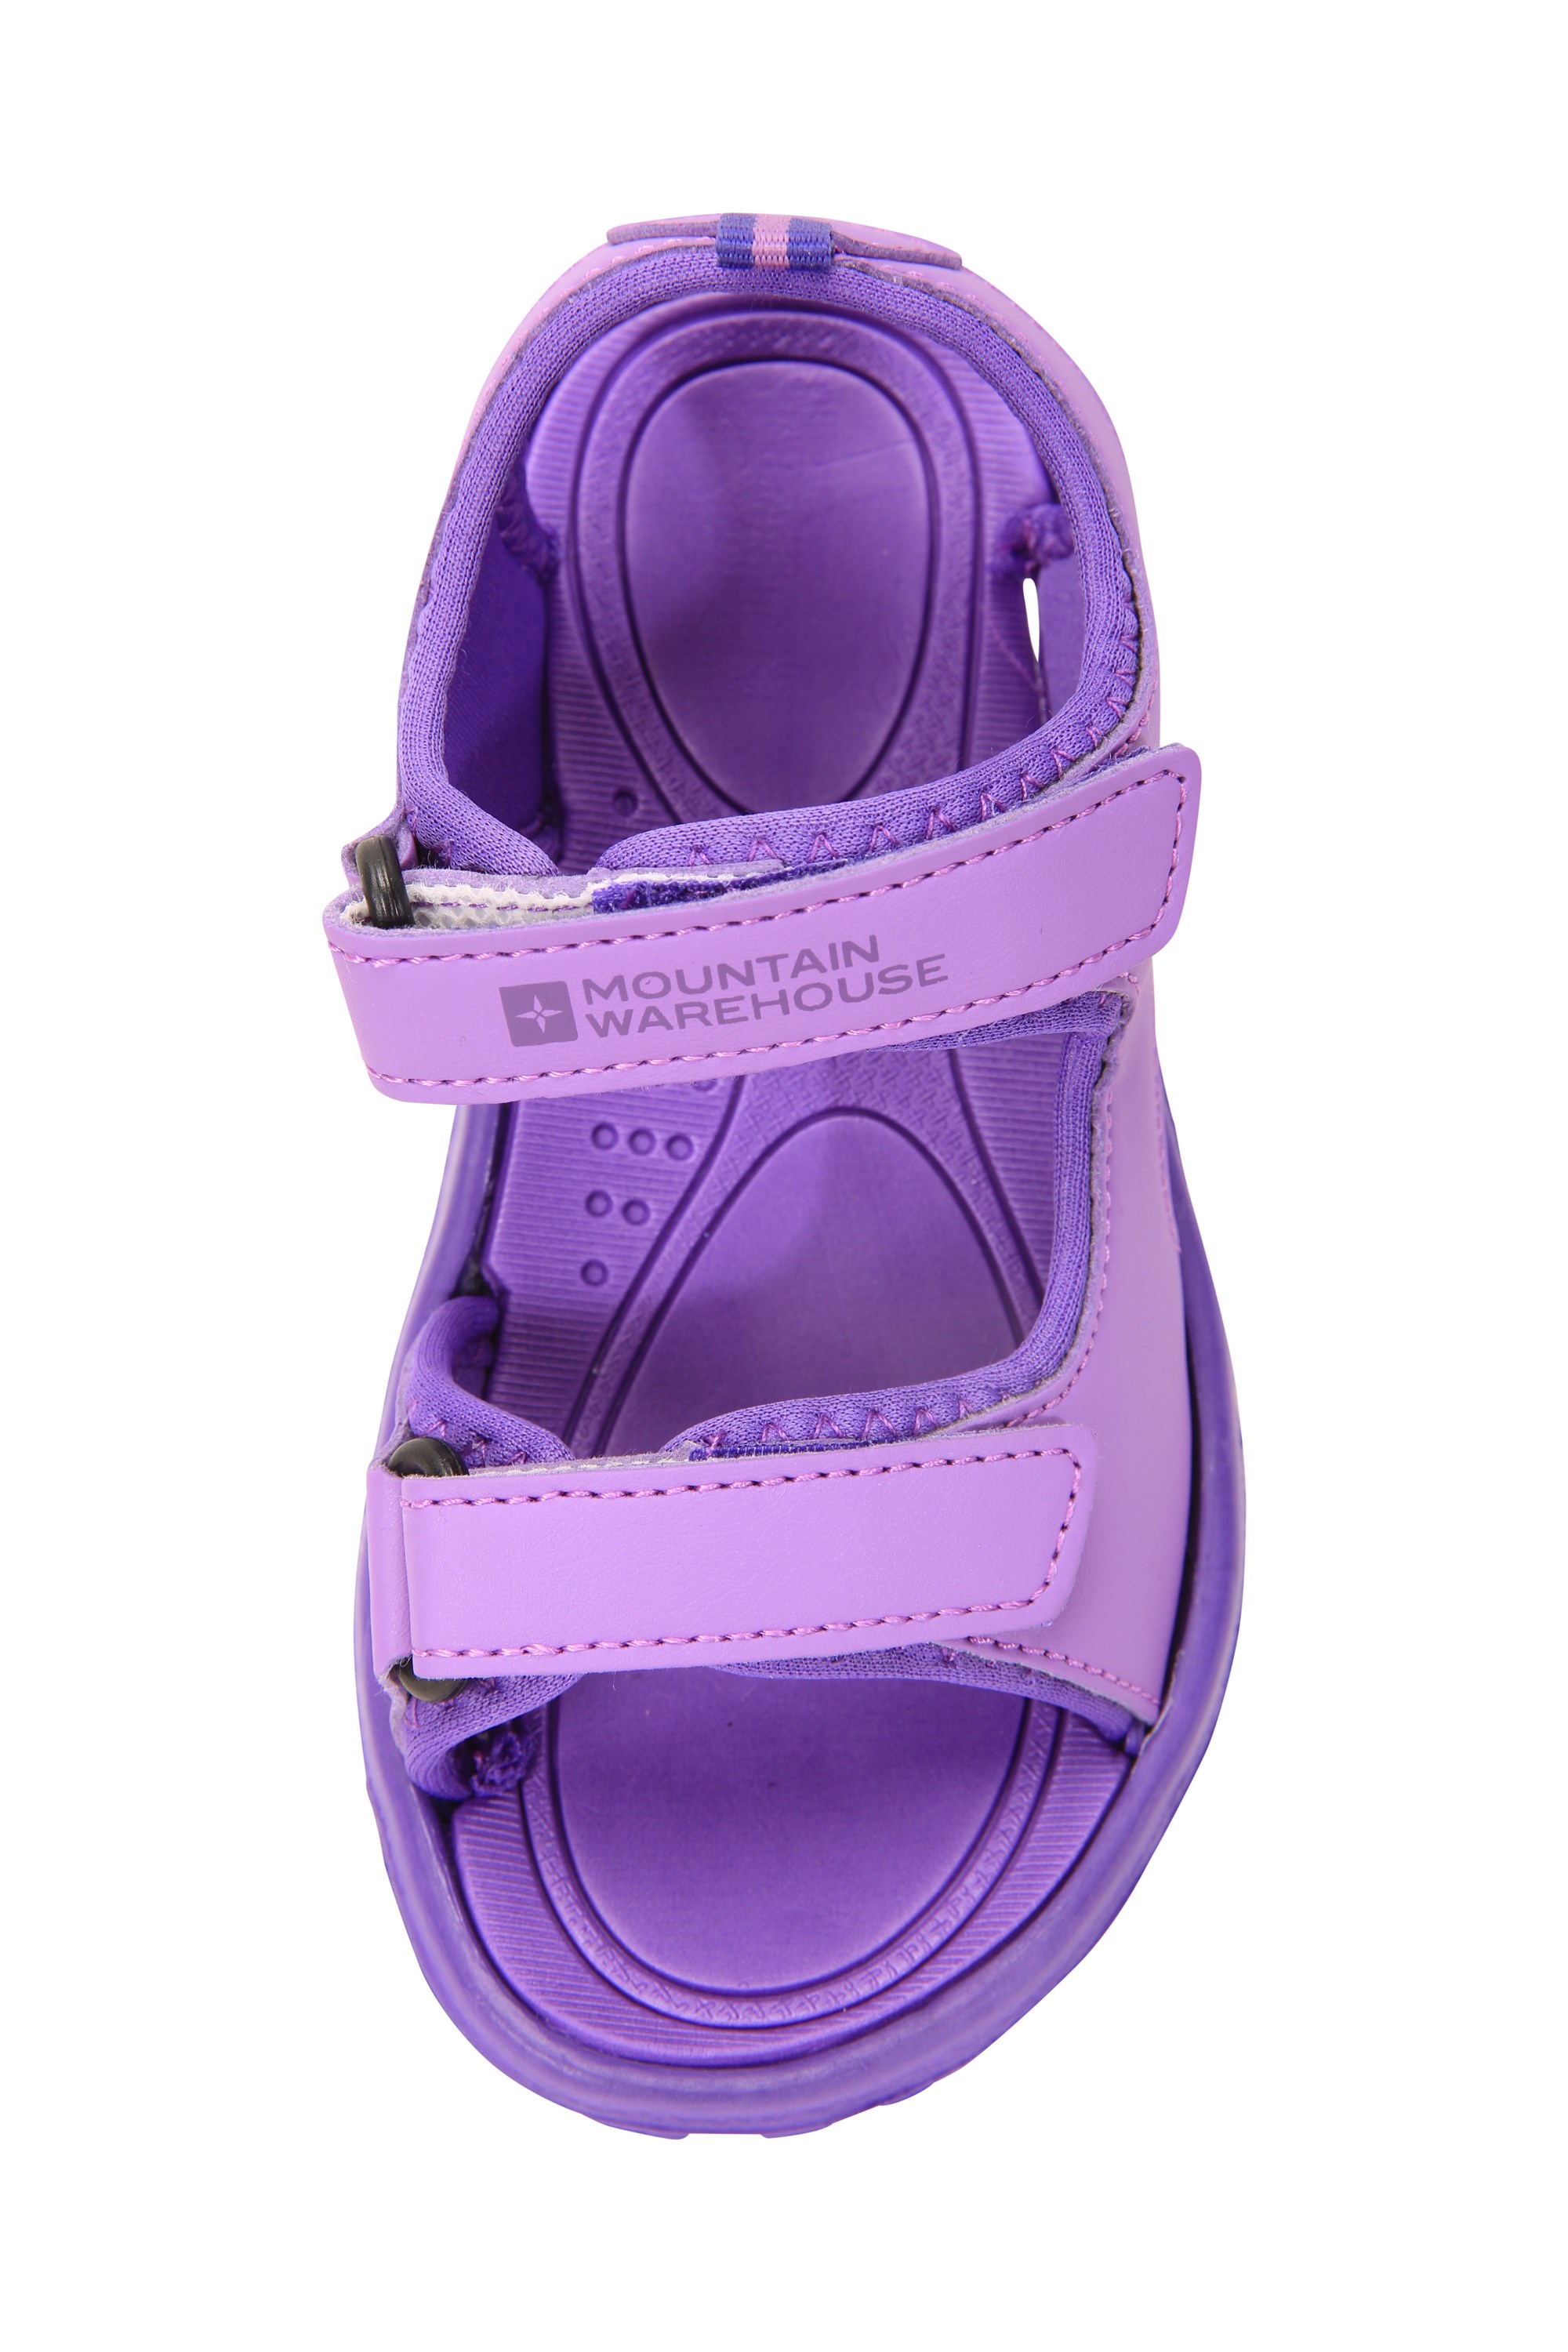 mountain warehouse girls sandals